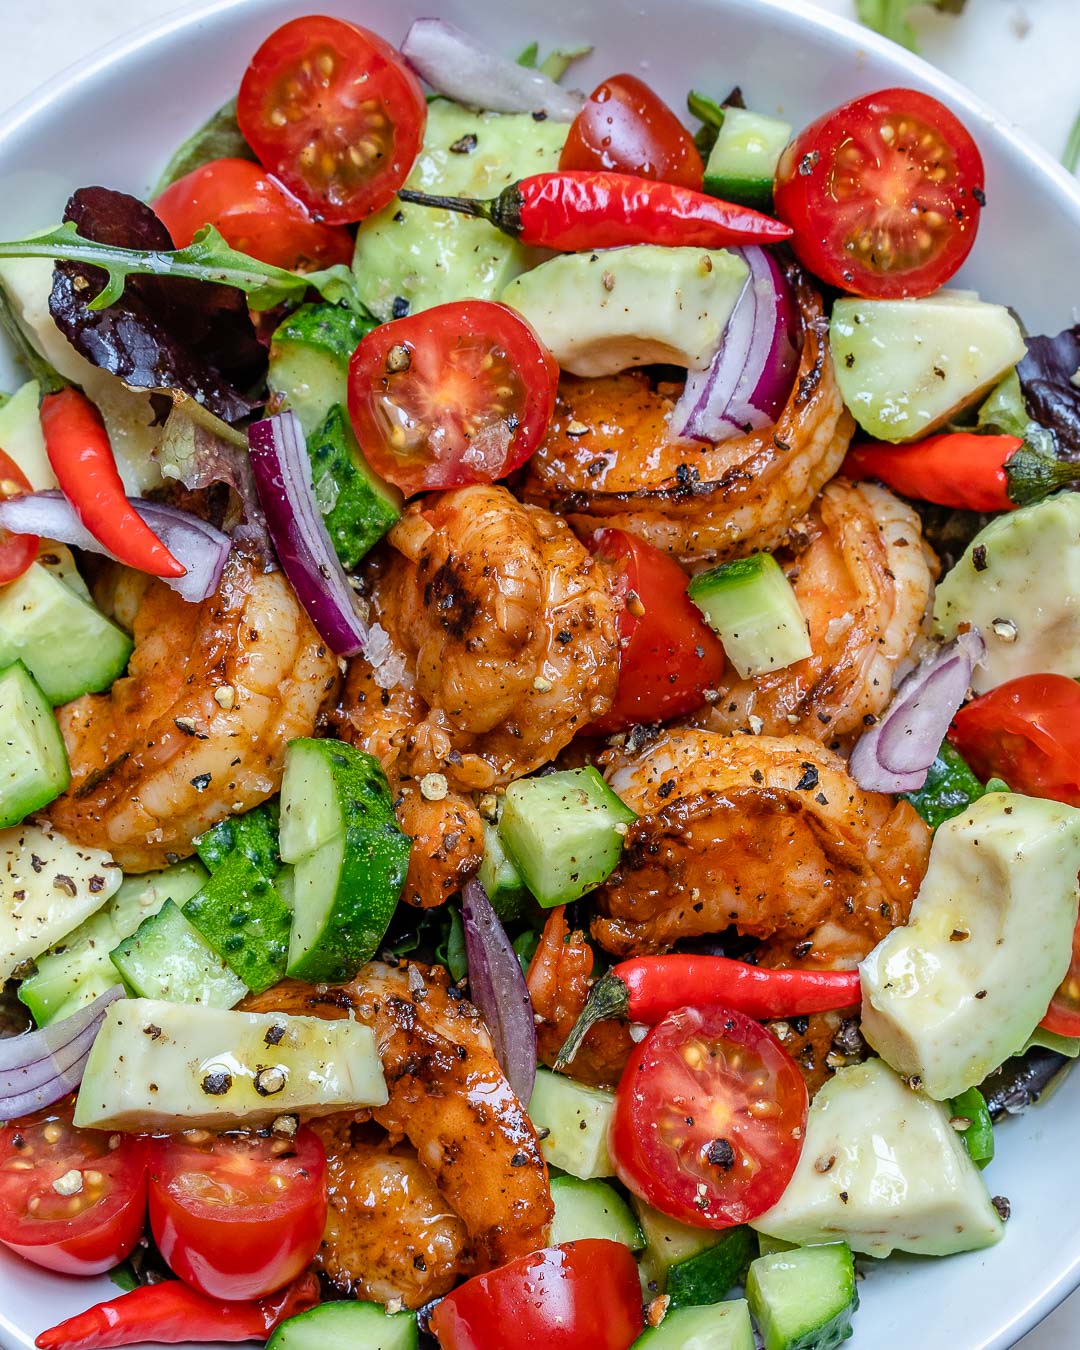 https://cleanfoodcrush.com/wp-content/uploads/2019/06/Chili-Lime-Shrimp-Salad-Recipes-by-CFC.jpg